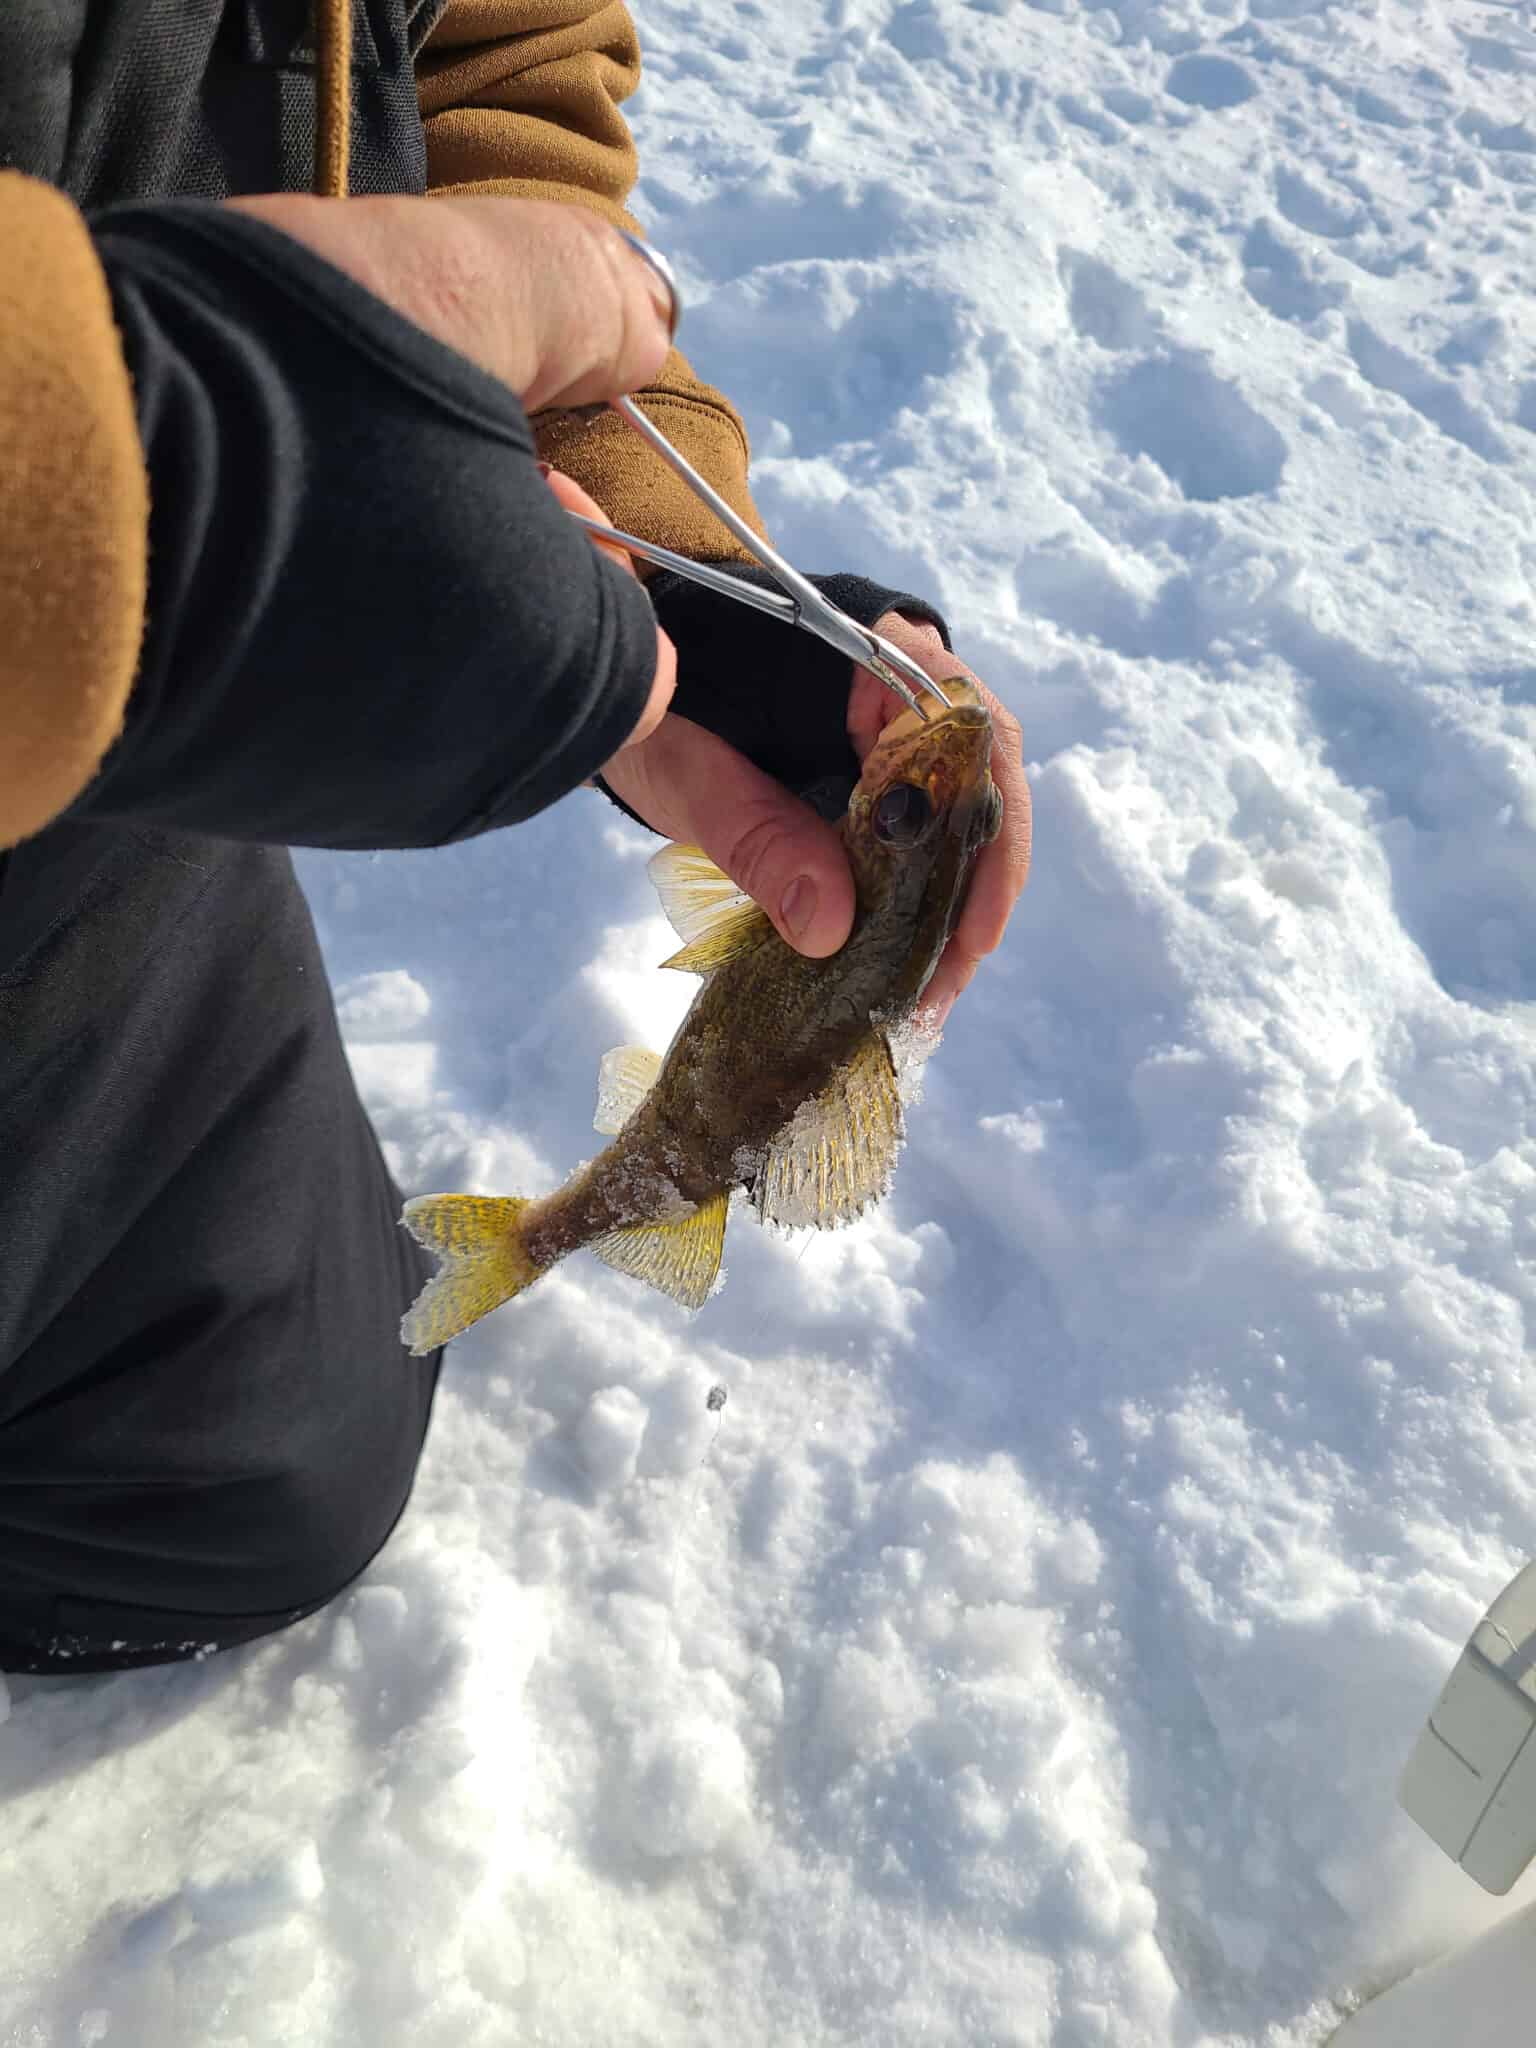 Fishing Report: Good Ice, Minimal Snow…Time to Fish!